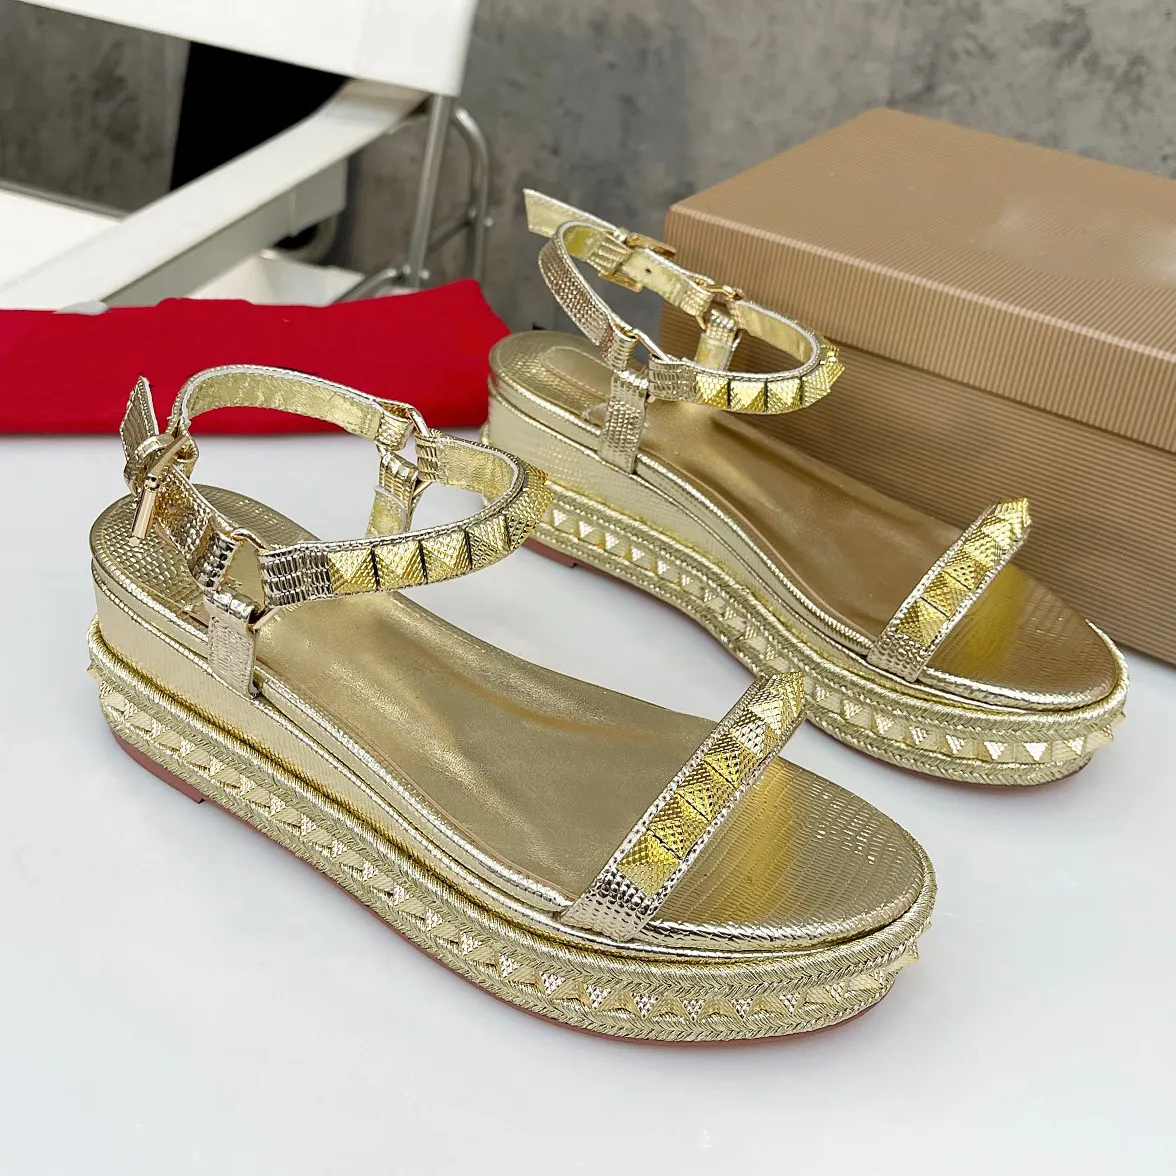 Mode sandaler designer skor pärla pil nagel dekorera snygg högklackad sko toppkvalitet 6.5 cm tjock botten lutning klack stor storlek kvinnorsandal 35-42